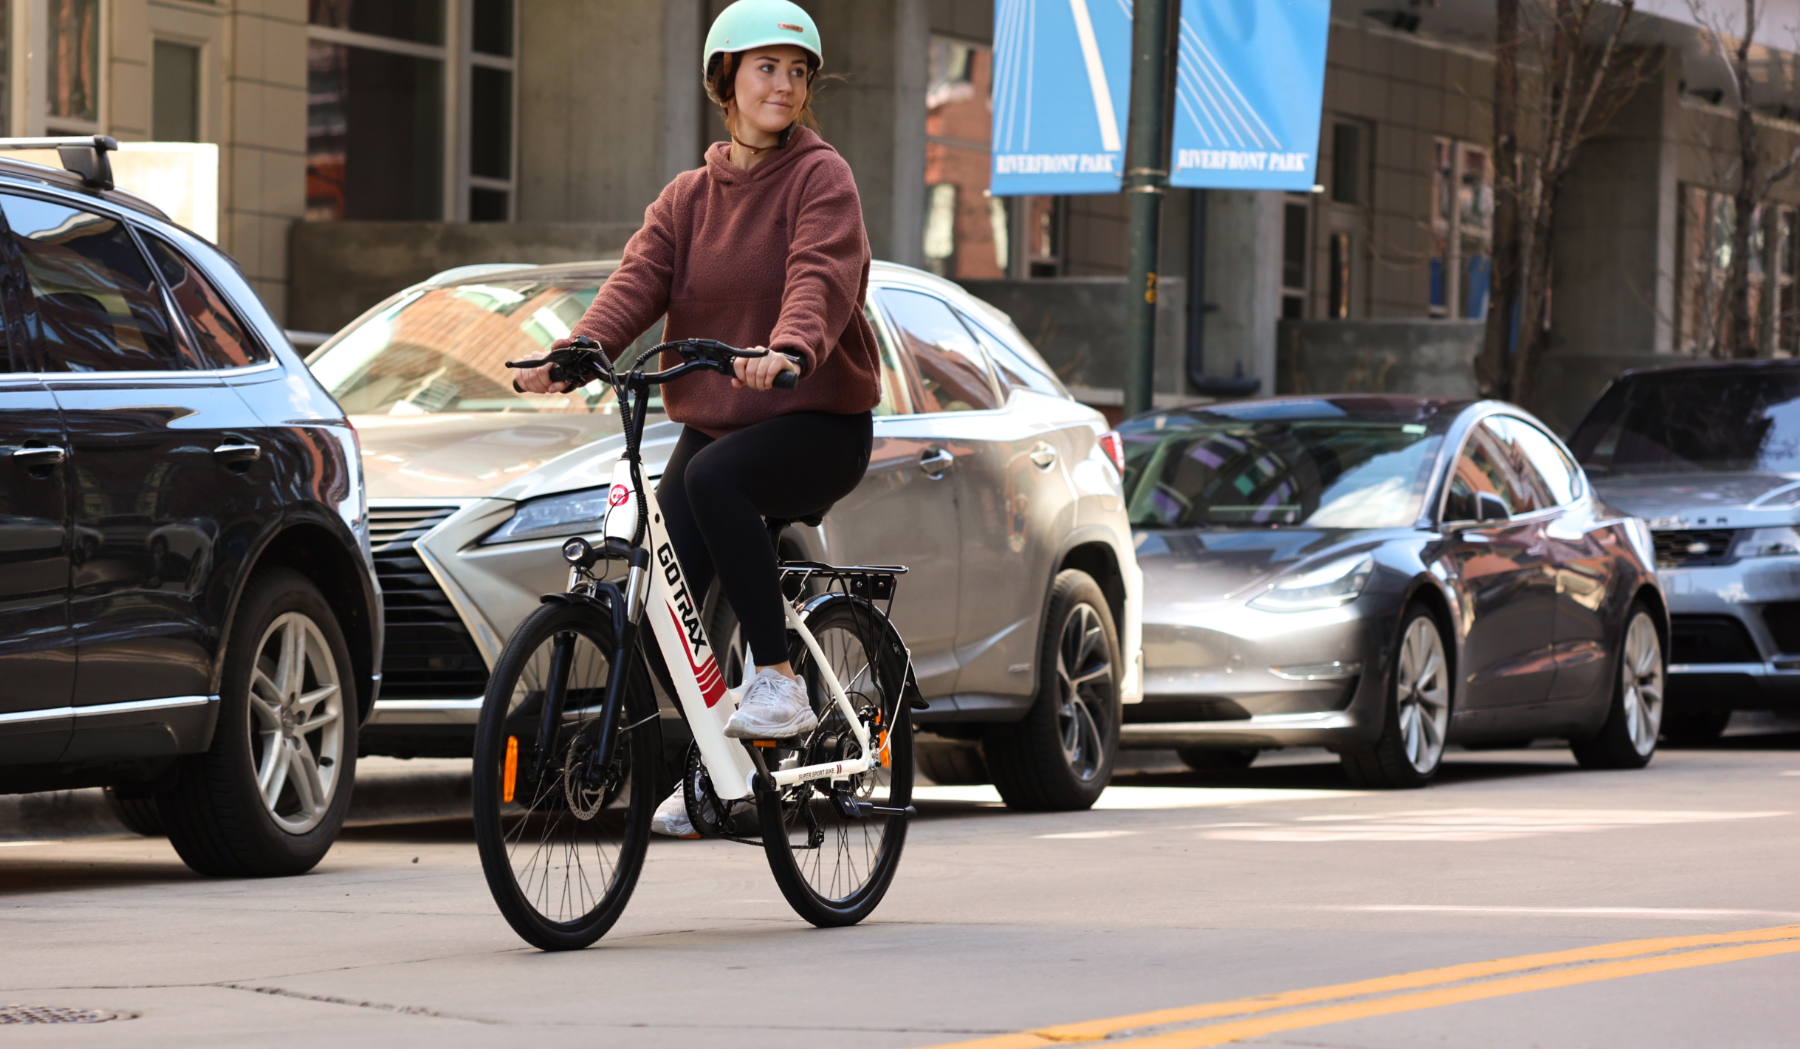 Riding an e-bike through the city.